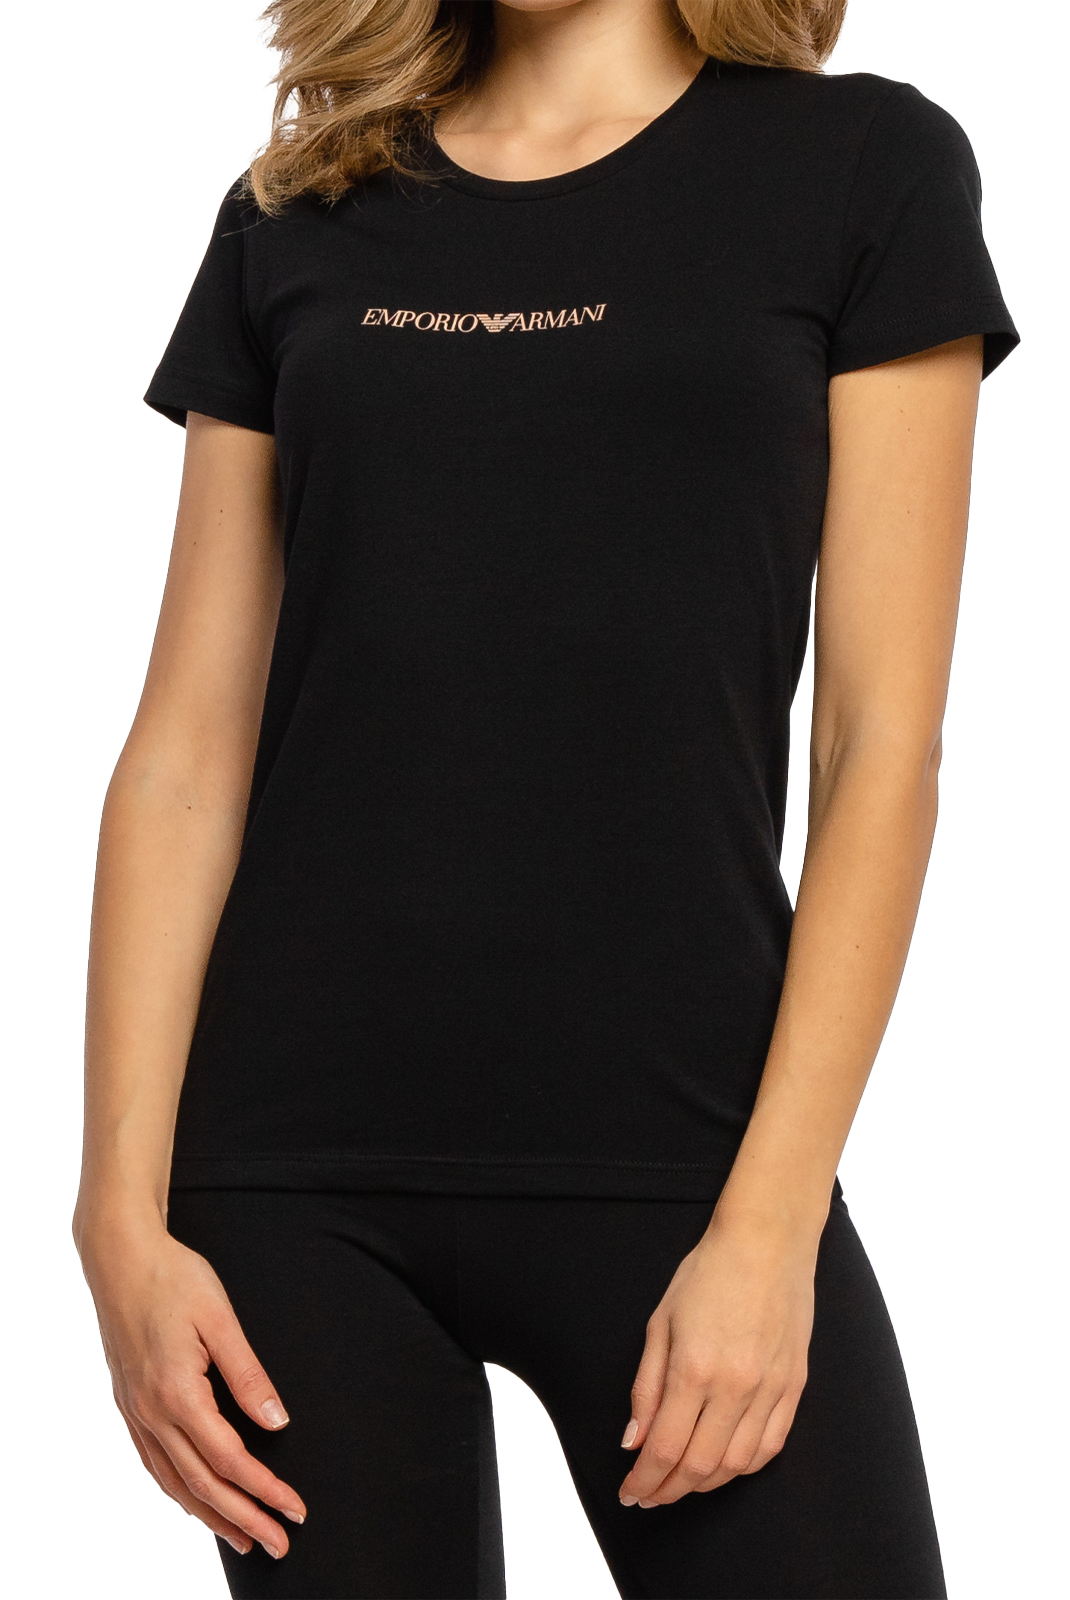  Tee-shirt Slim Fit Noir 163139 Emporio Armani